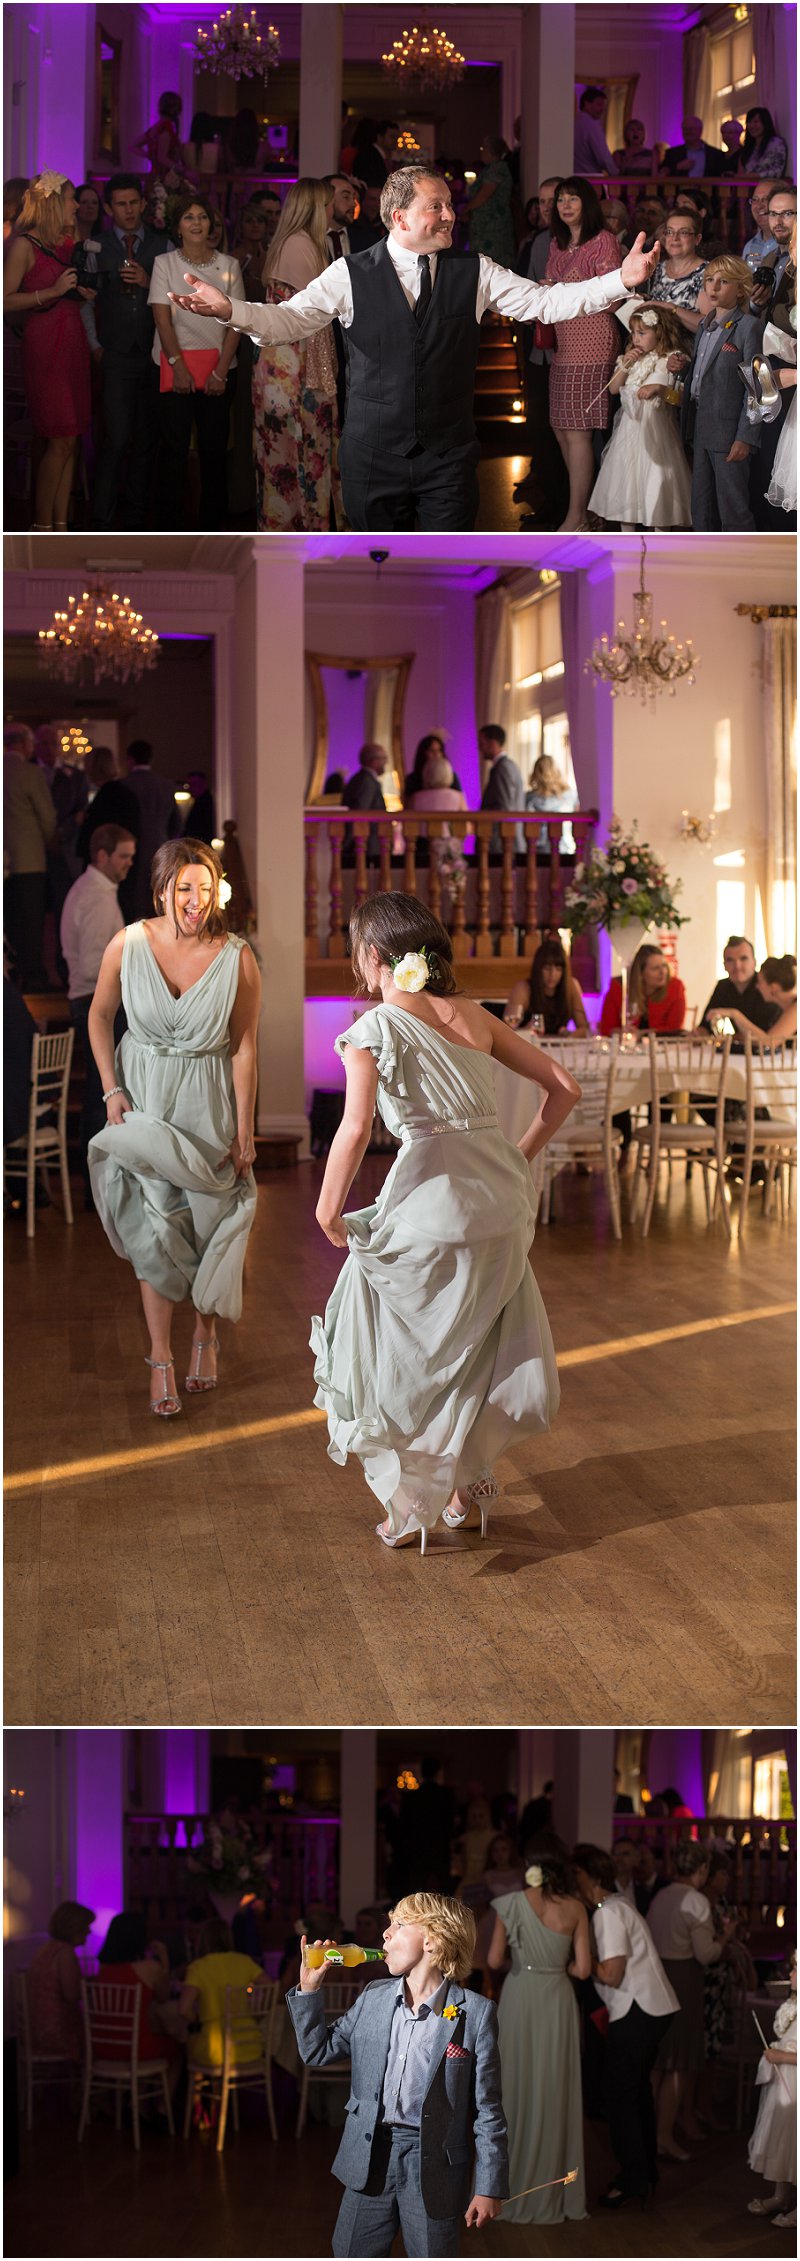 Evening dancing at West Tower Wedding Venue | Lancashire Wedding Photography